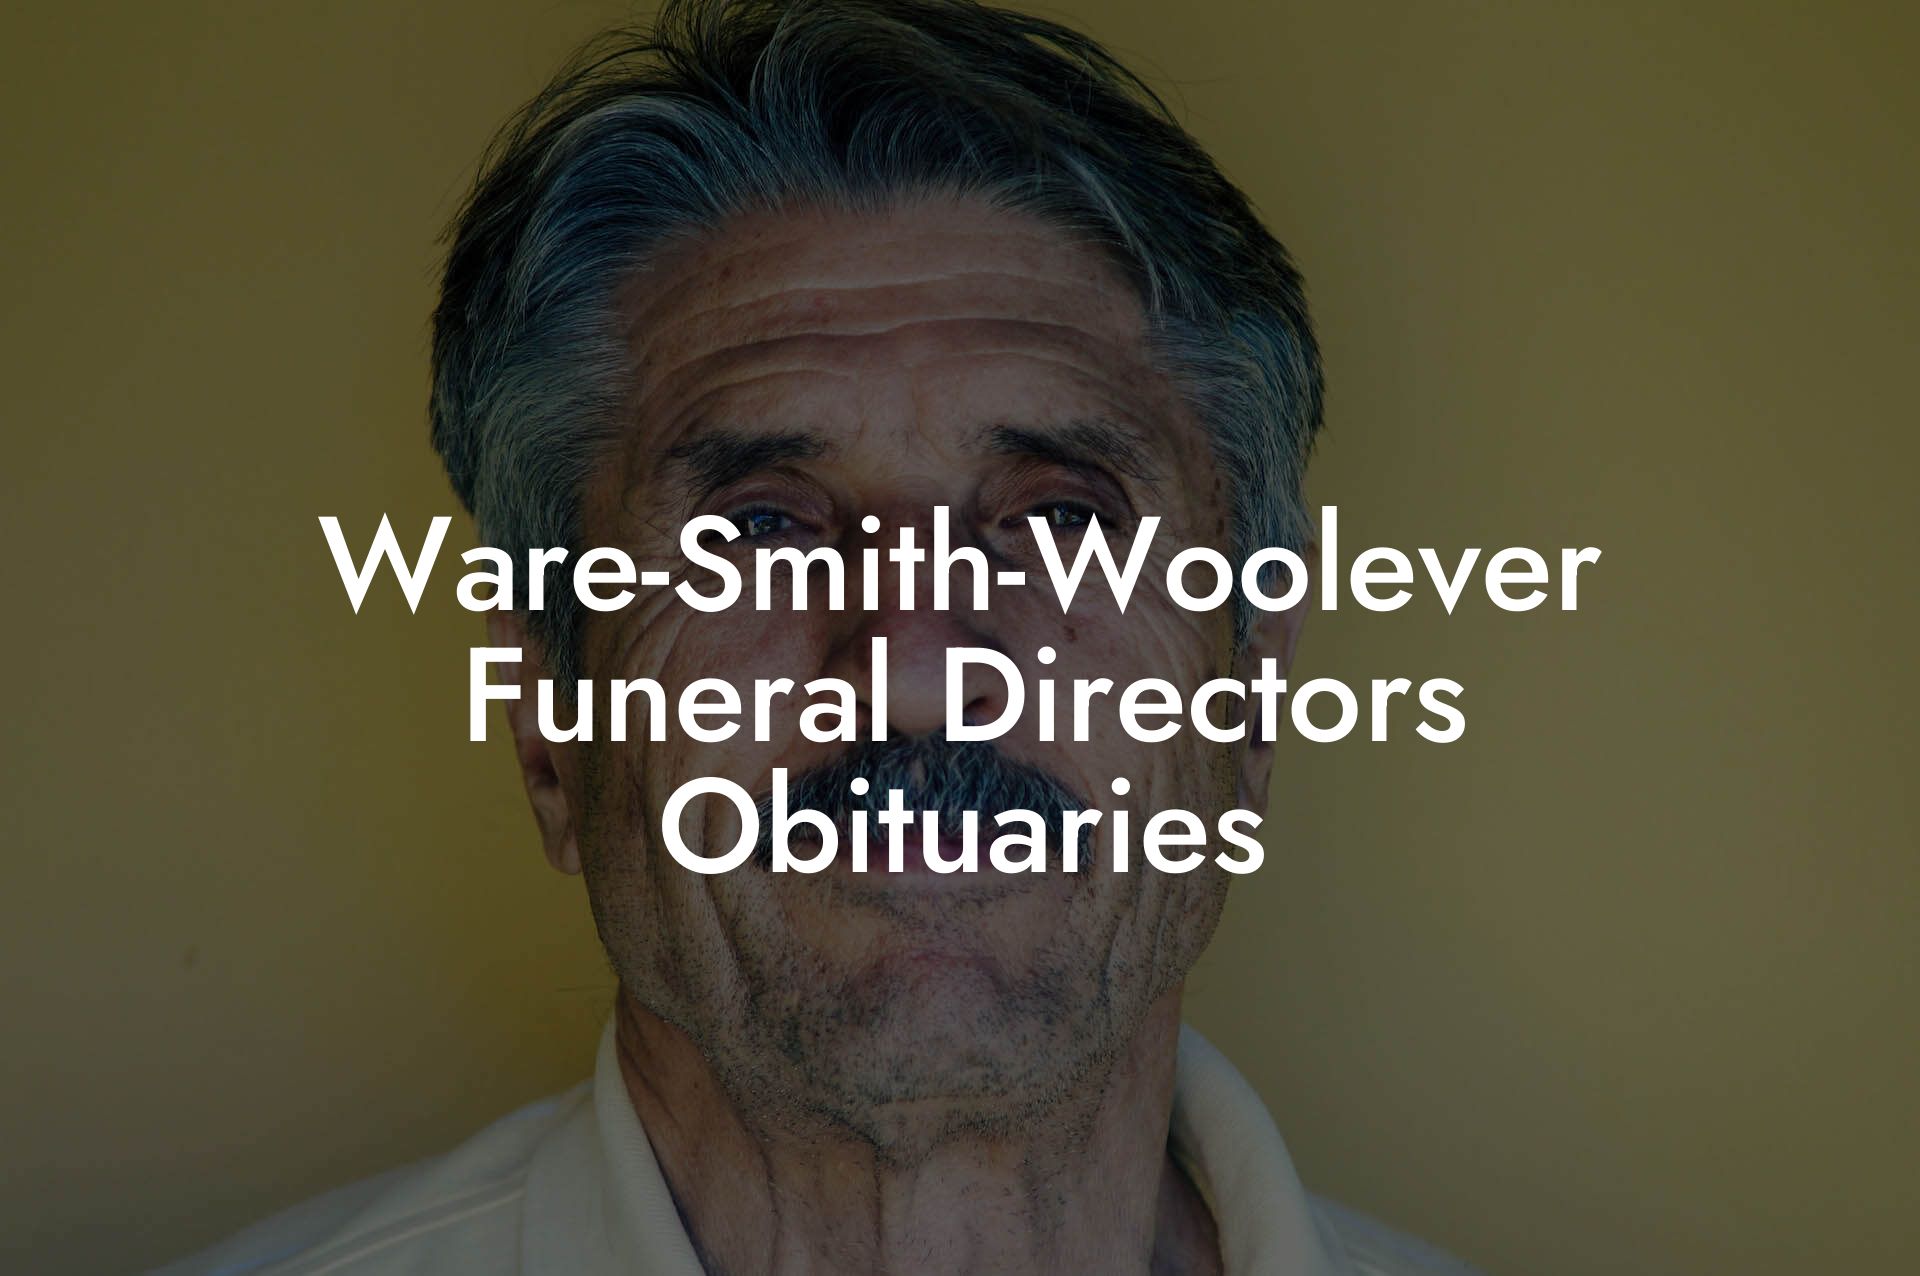 Ware-Smith-Woolever Funeral Directors Obituaries